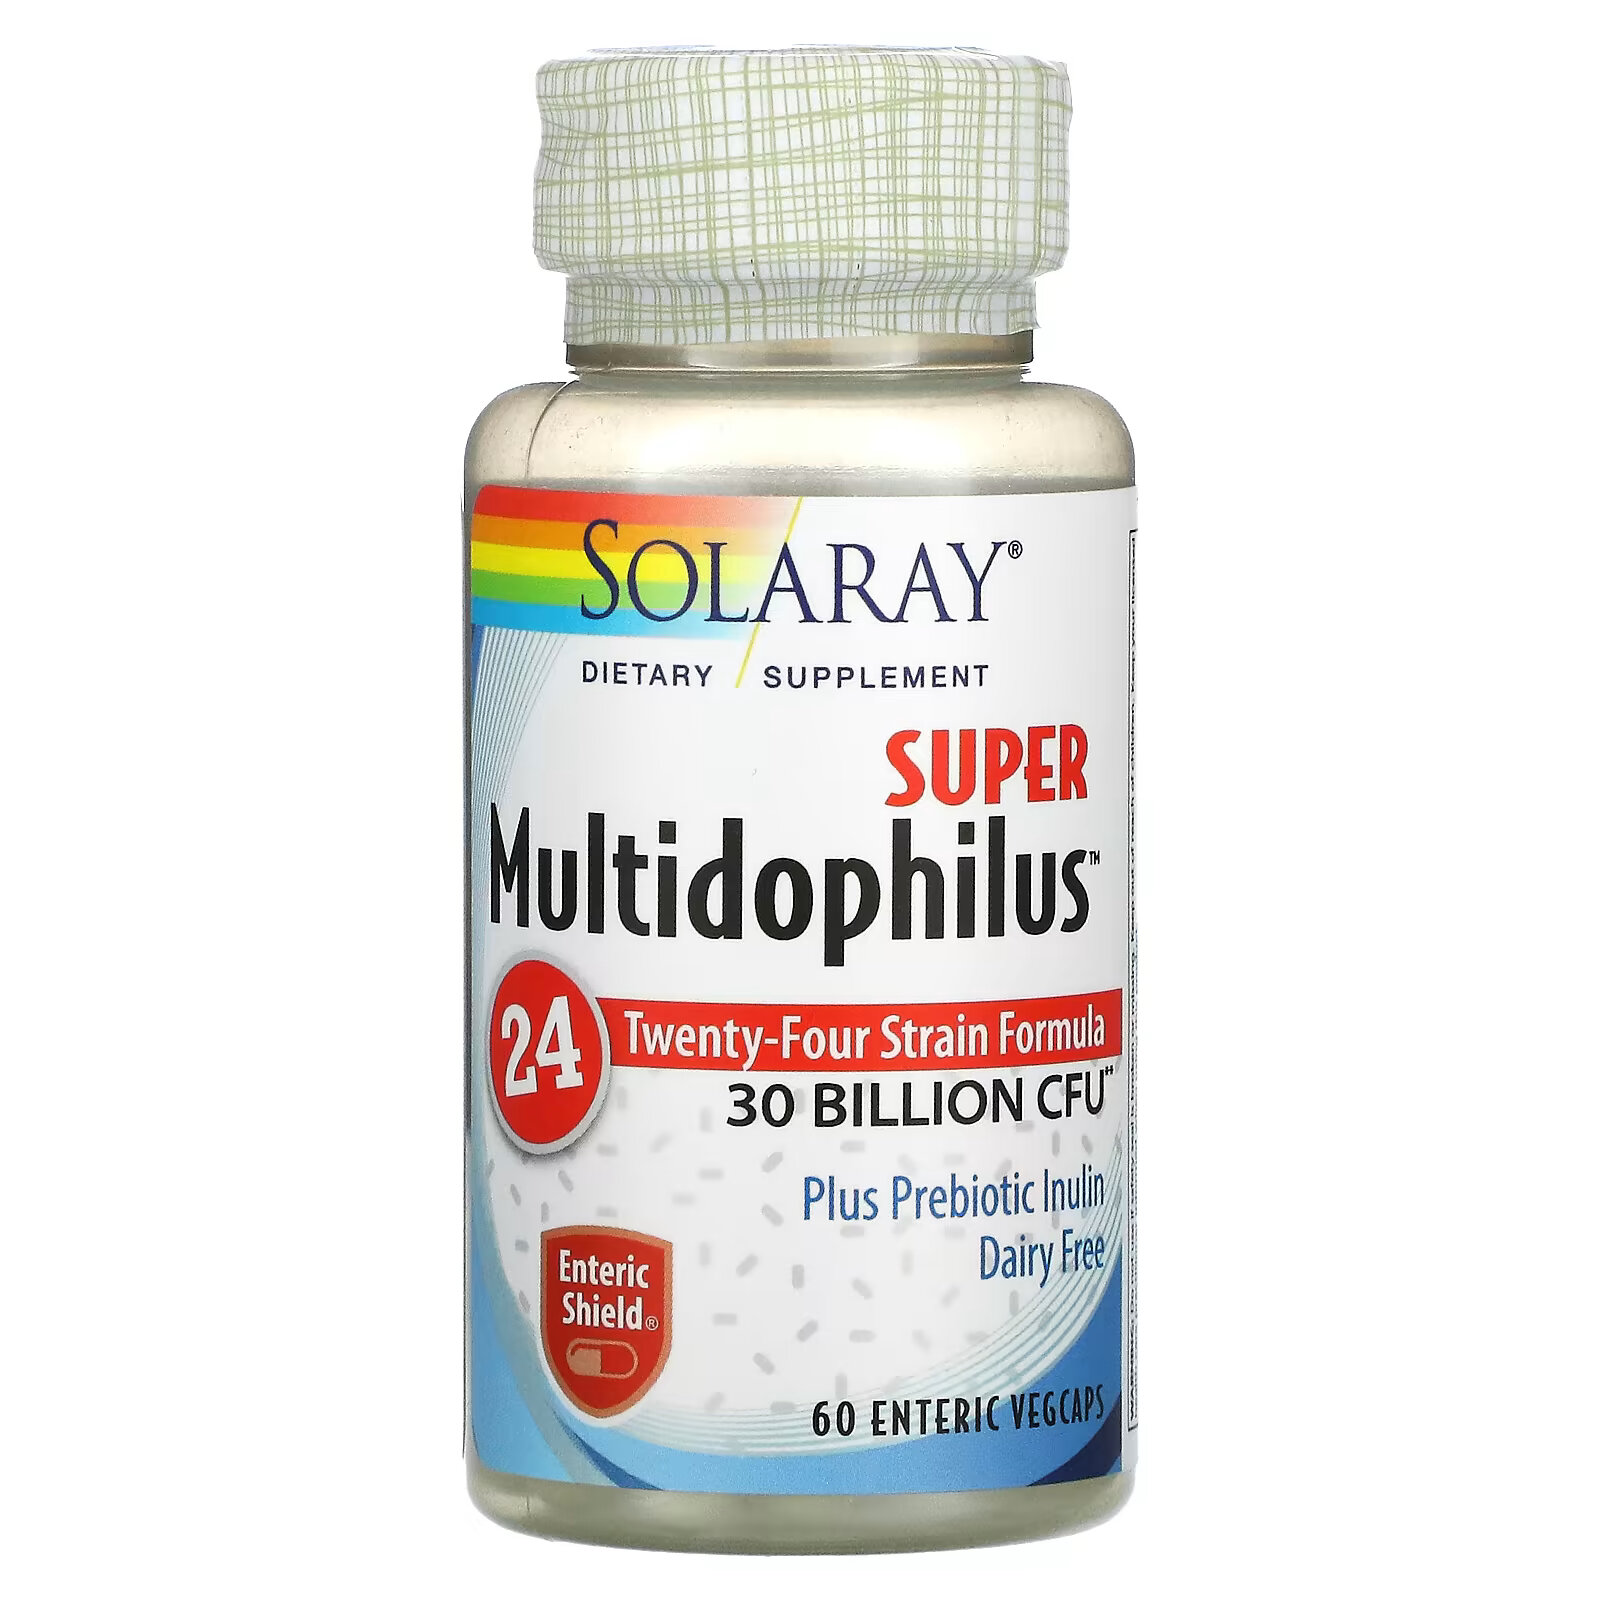 solaray multidophilus probiotic пробиотик 20 млрд кое 100 вегетарианских капсул vegcaps Solaray, Super Multidophilus, пробиотики, 15 млрд КОЕ, 60 капсул Vegcaps с кишечнорастворимой оболочкой